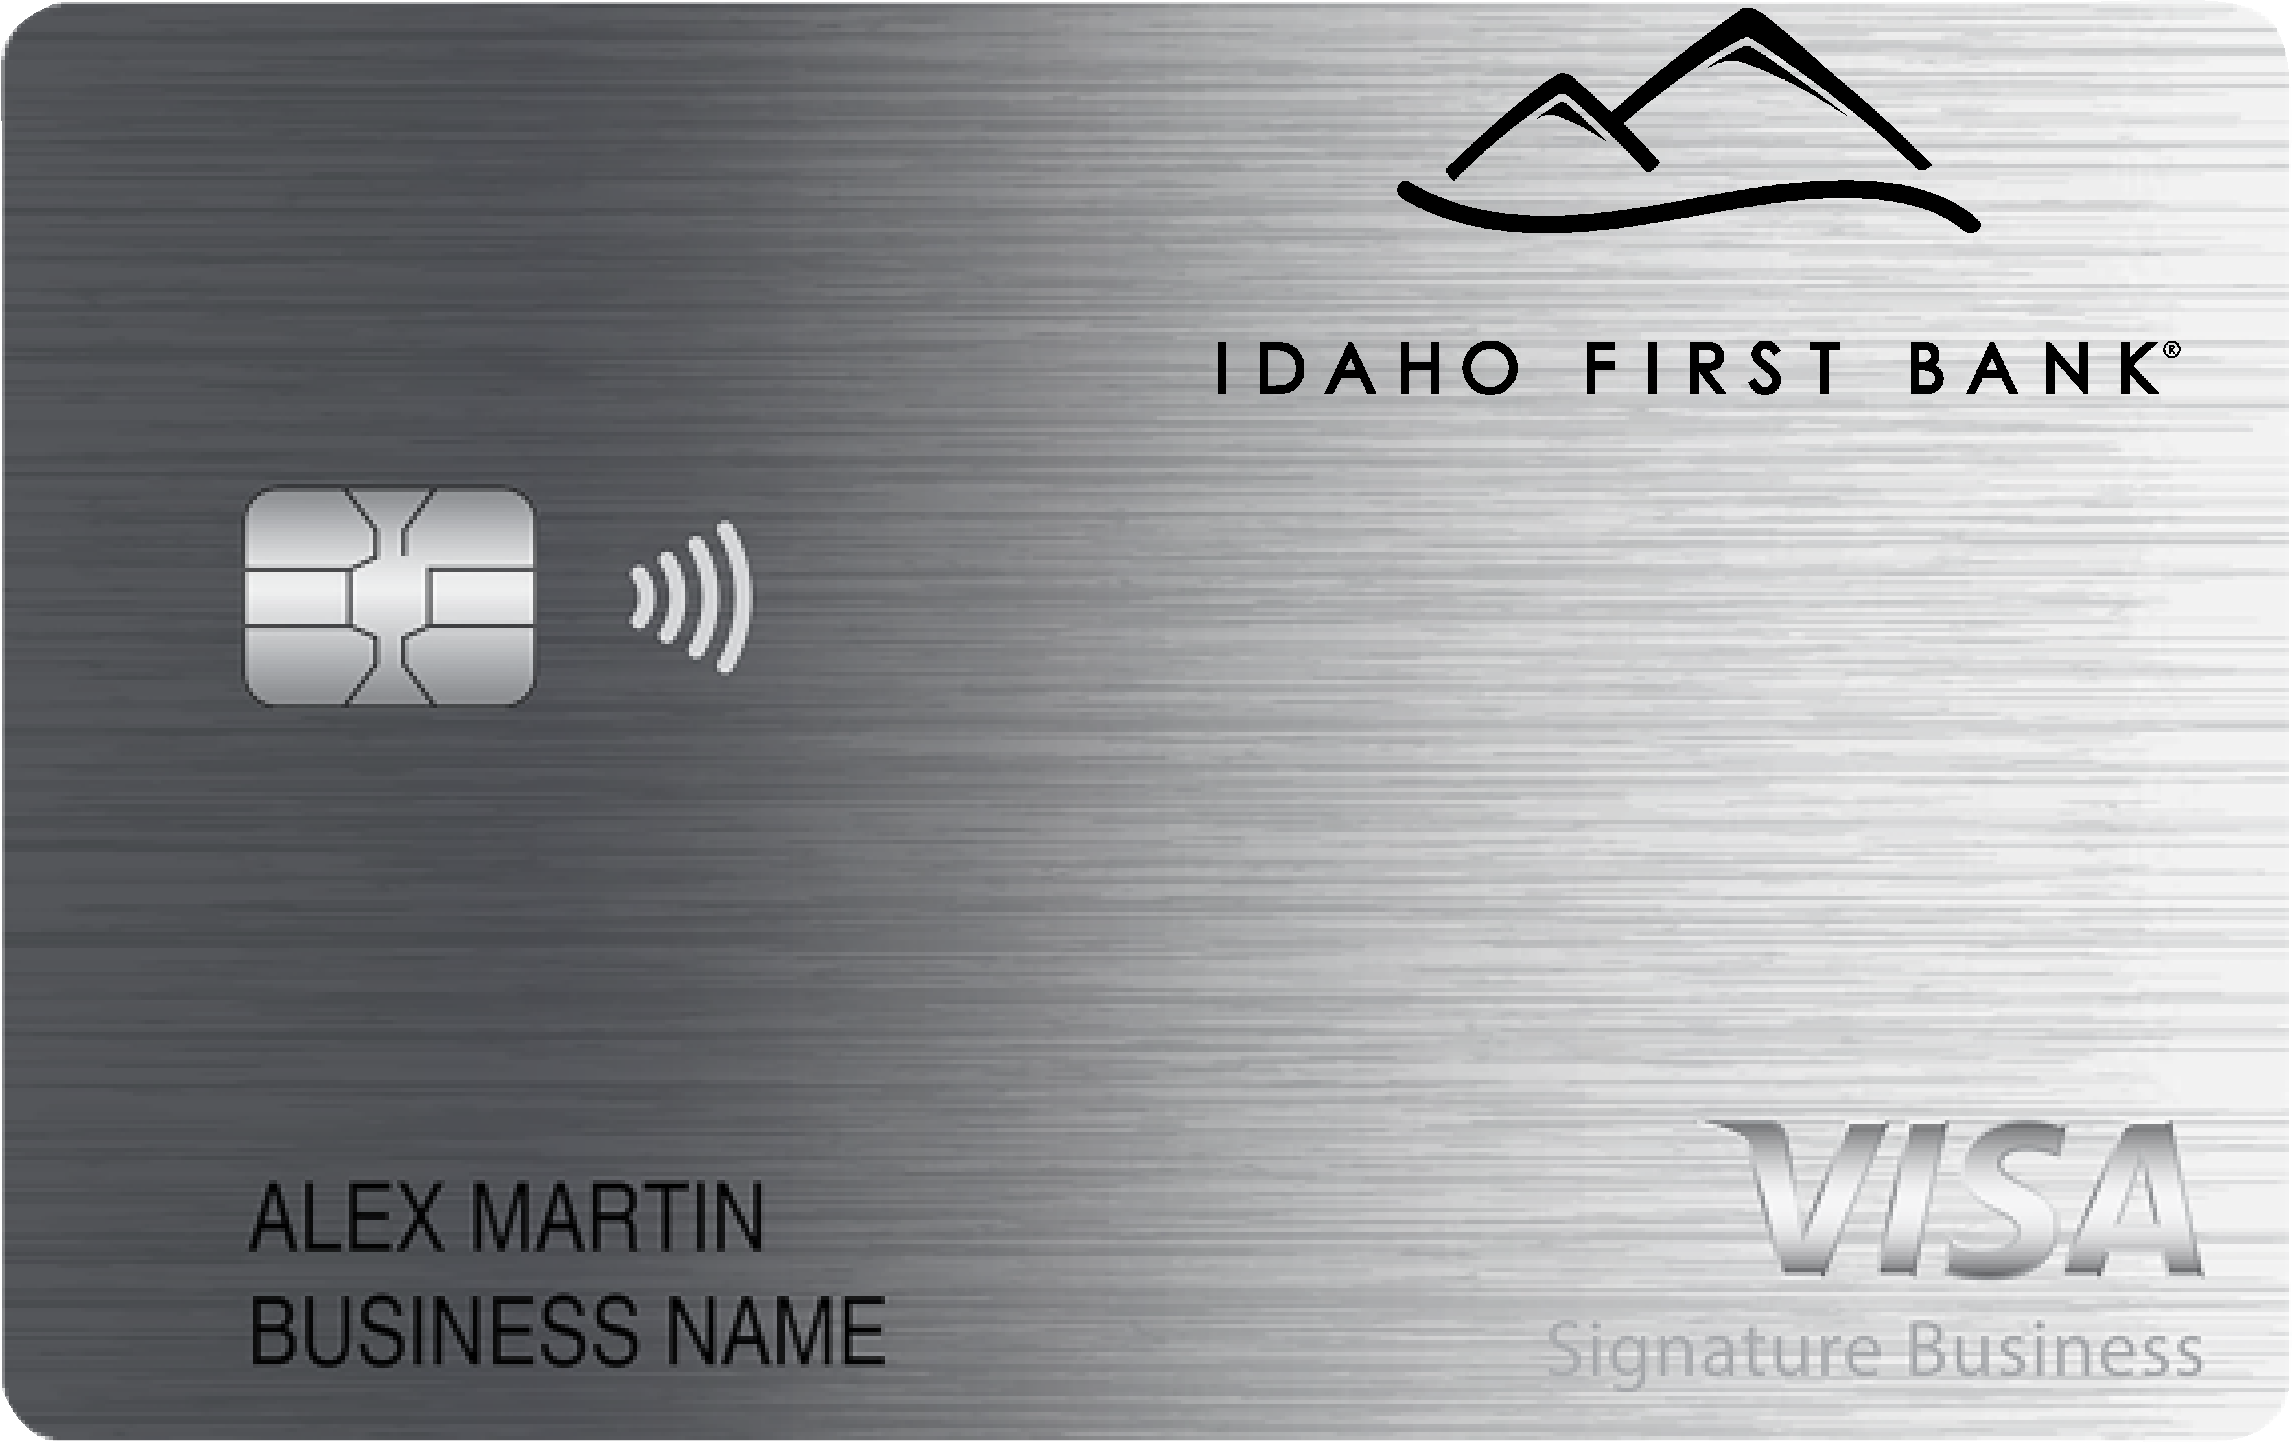 Idaho First Bank Smart Business Rewards Card